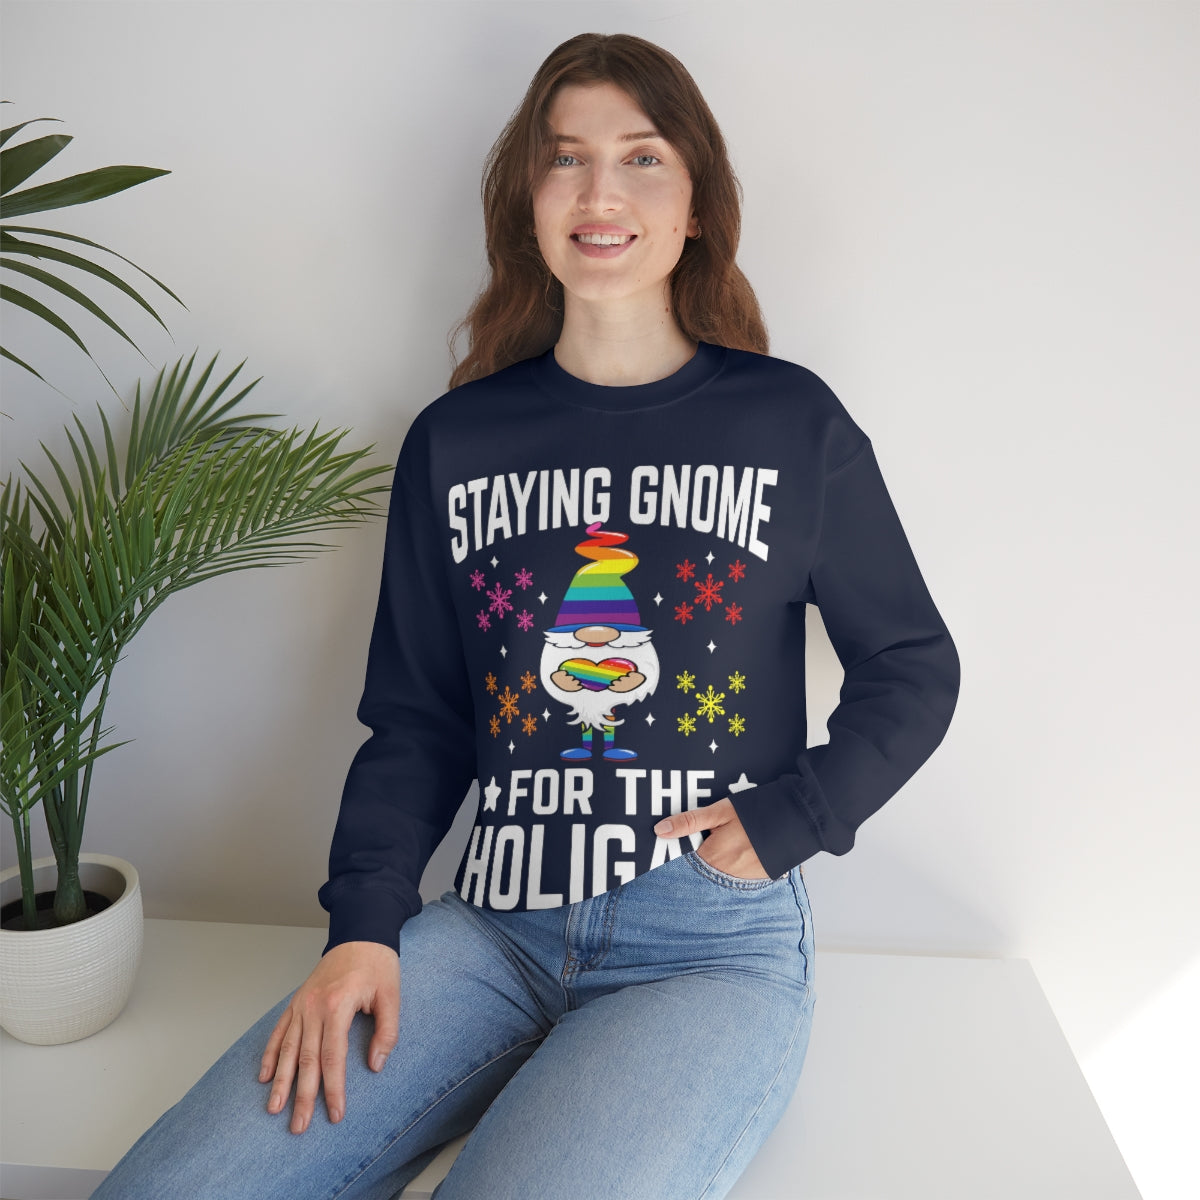 Unisex Christmas LGBTQ Heavy Blend Crewneck Sweatshirt - Staying Gnome For The Holigays Printify